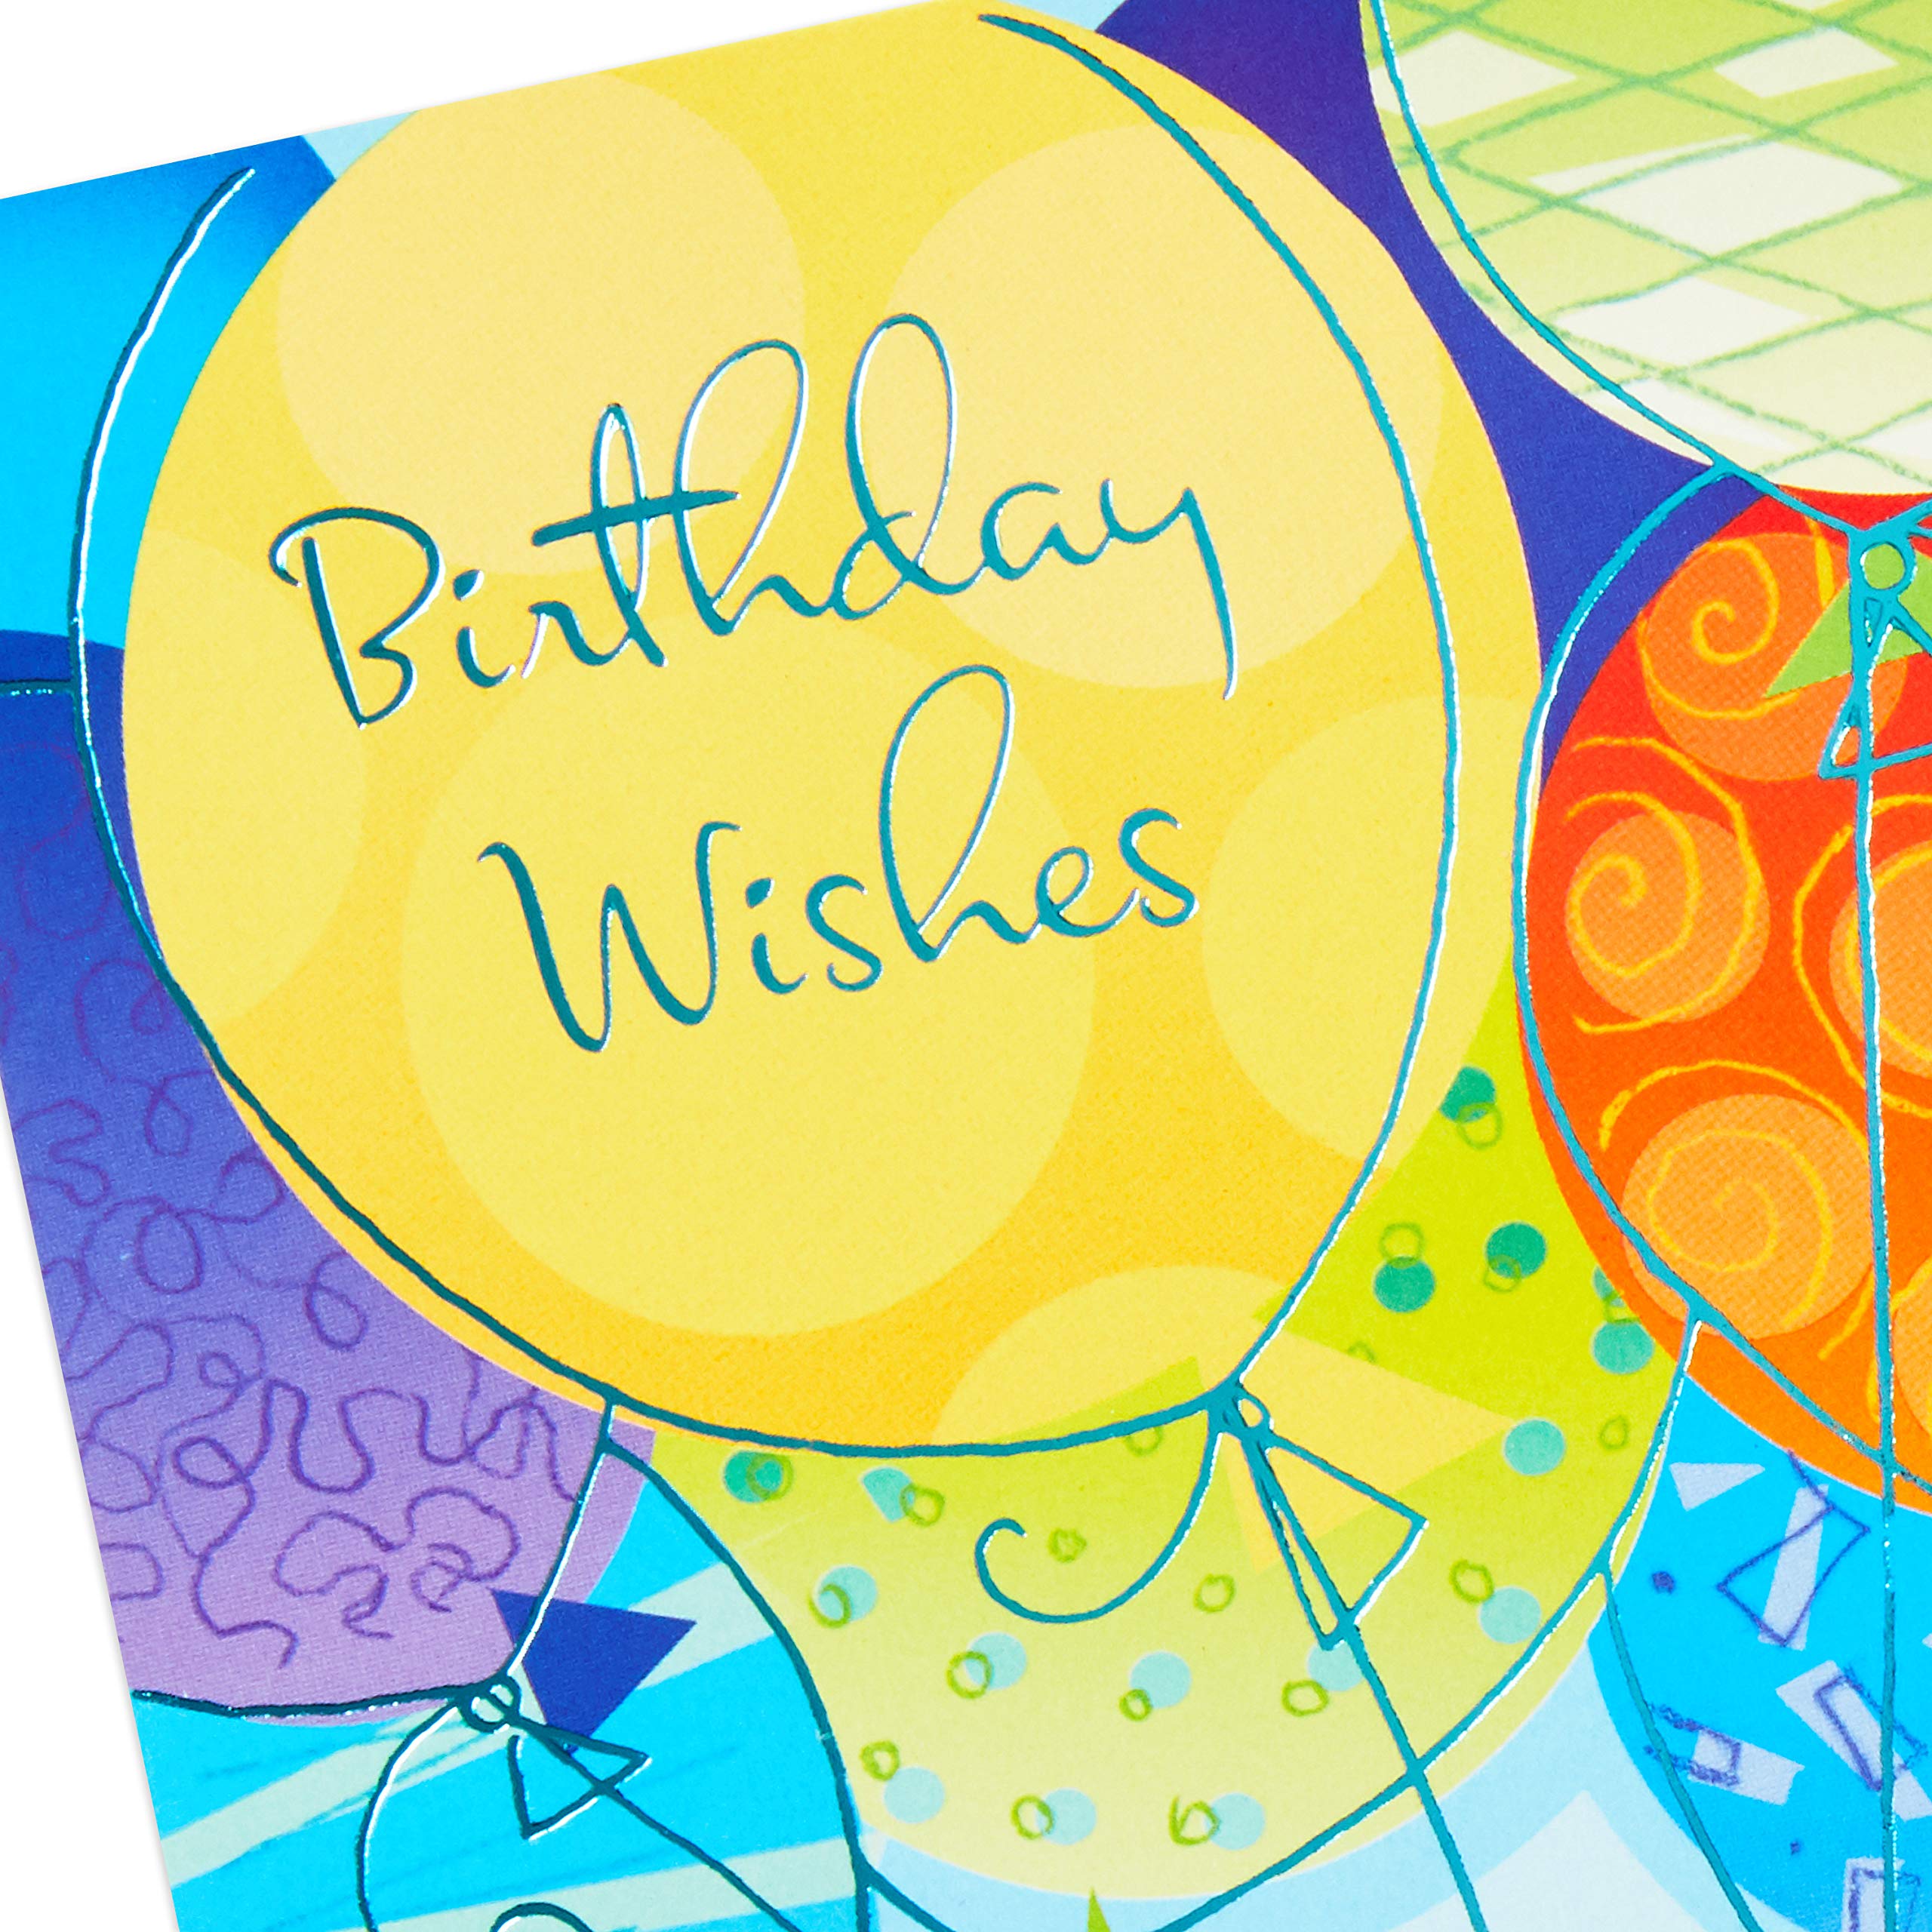 Hallmark Birthday Cards Assortment, 20 Cards with Envelopes (Refill Pack for Hallmark Card Organizer Box)